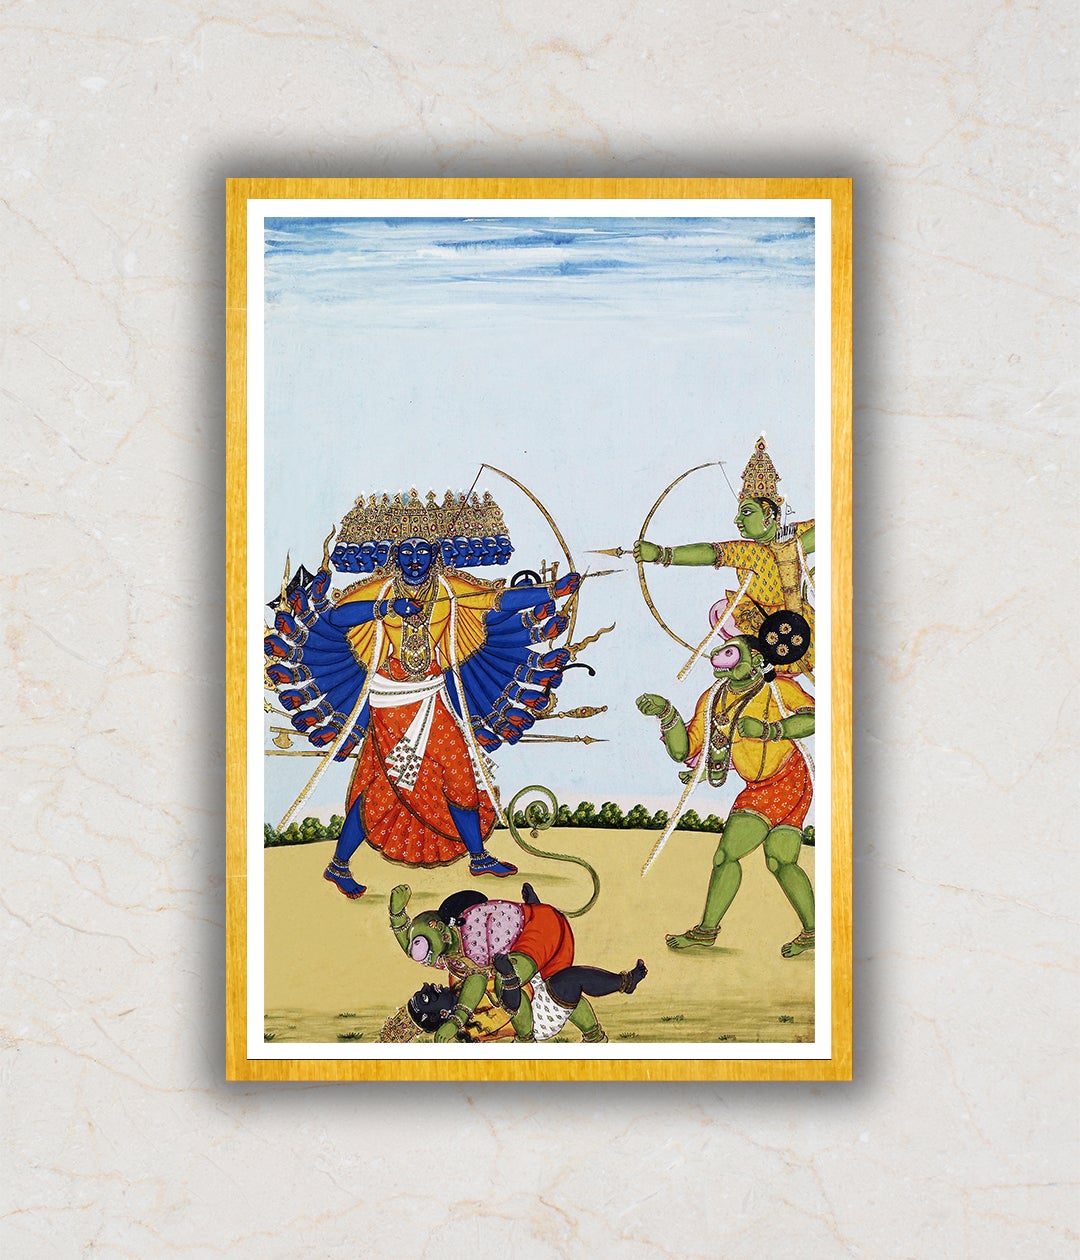 Rama and Hanuman Fighting Ravana Artwork Painting For Home Wall Art DŽcor